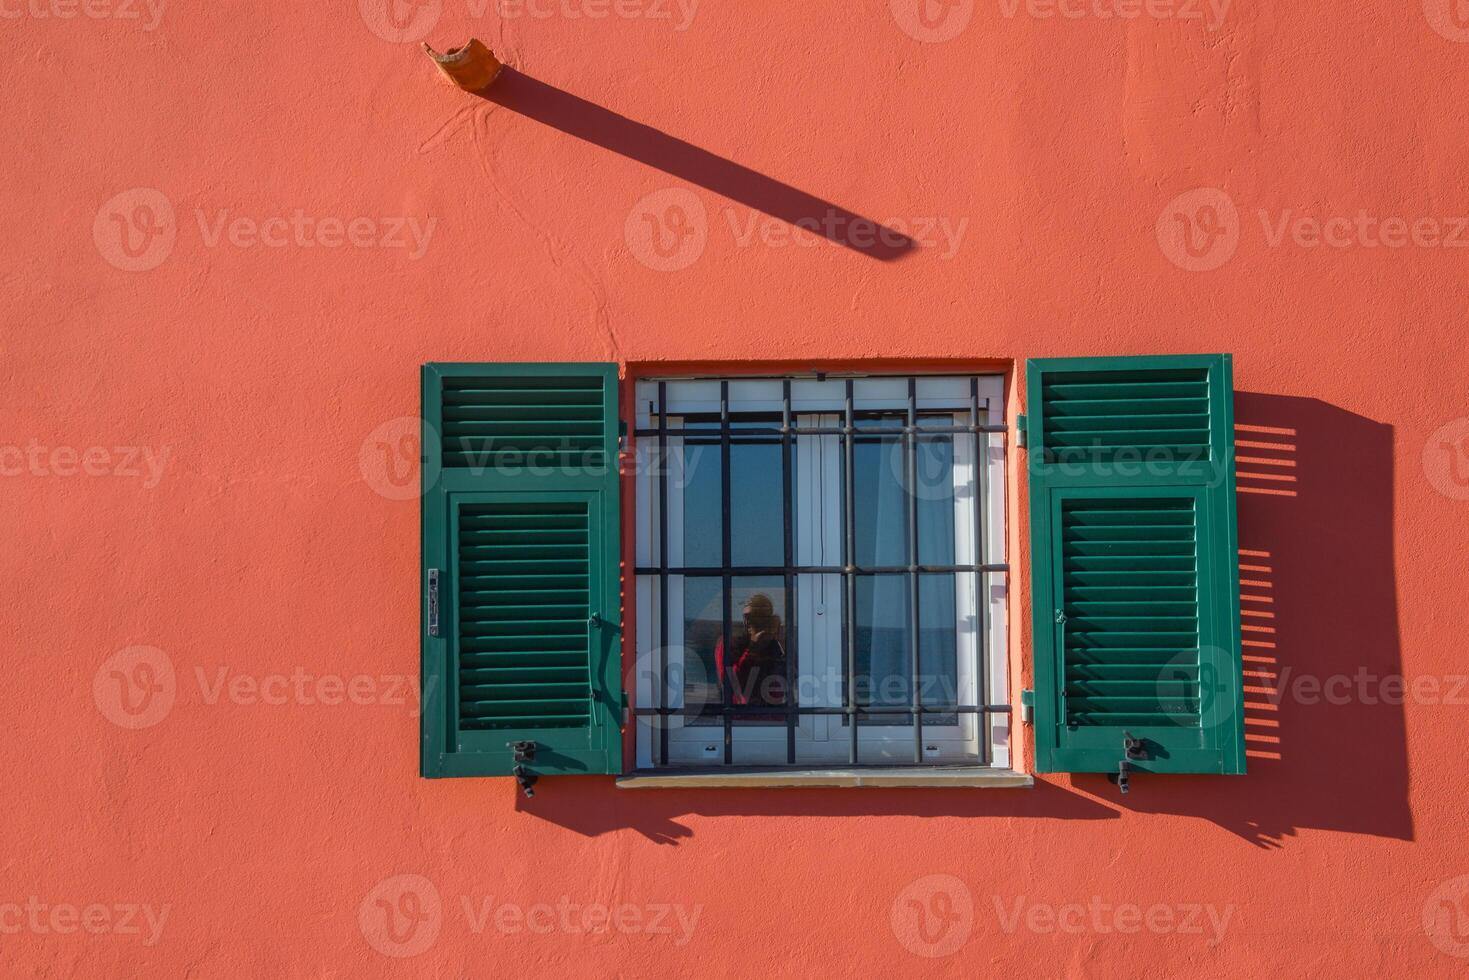 a Vila do Verigotti com Está característica colorida casas foto